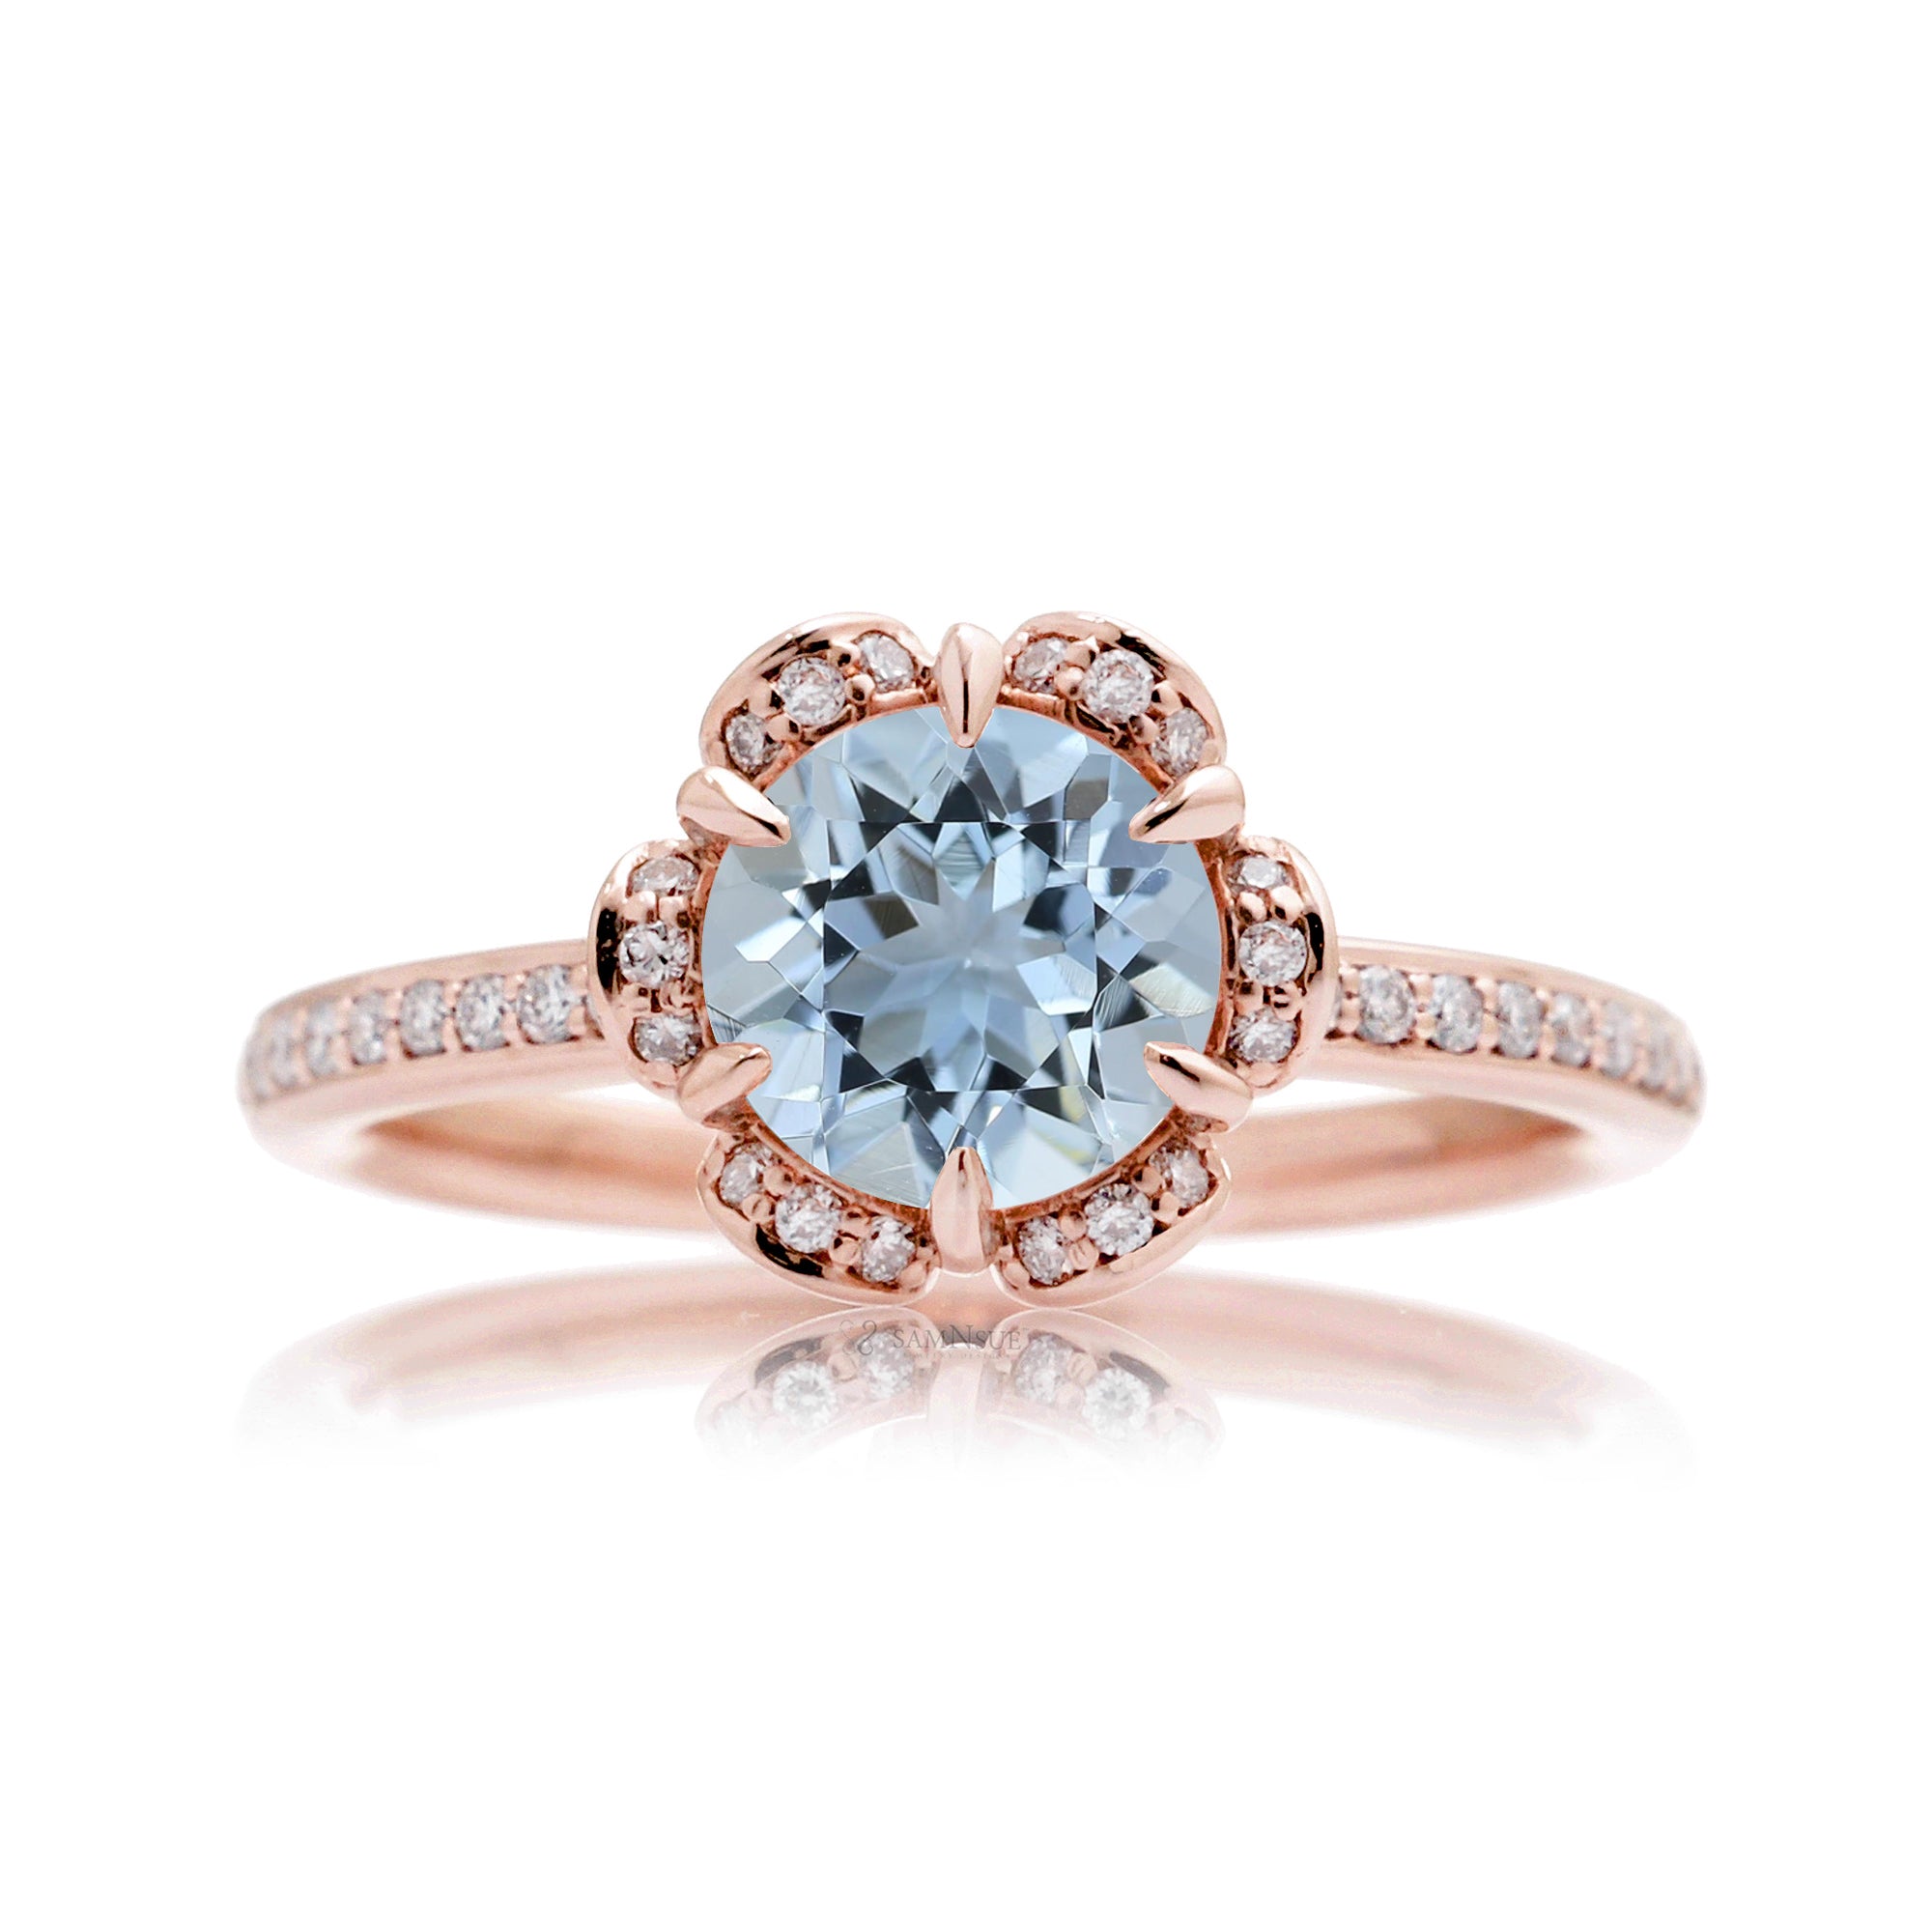 Aquamarine ring March birthstone diamond accent rose gold